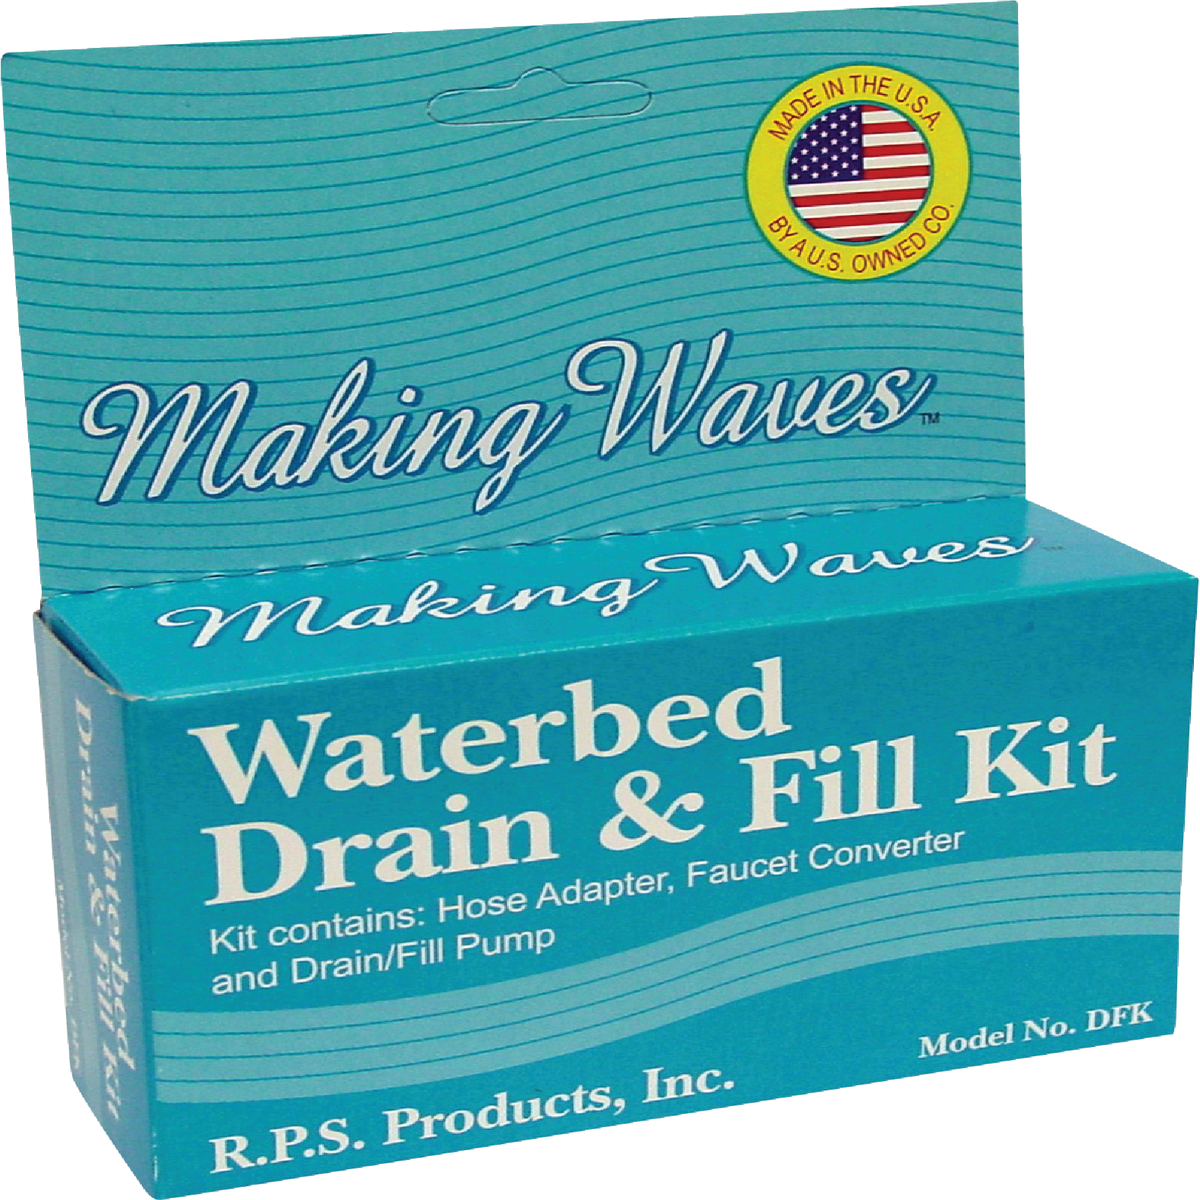 Water Bed Drain & Fill Kit